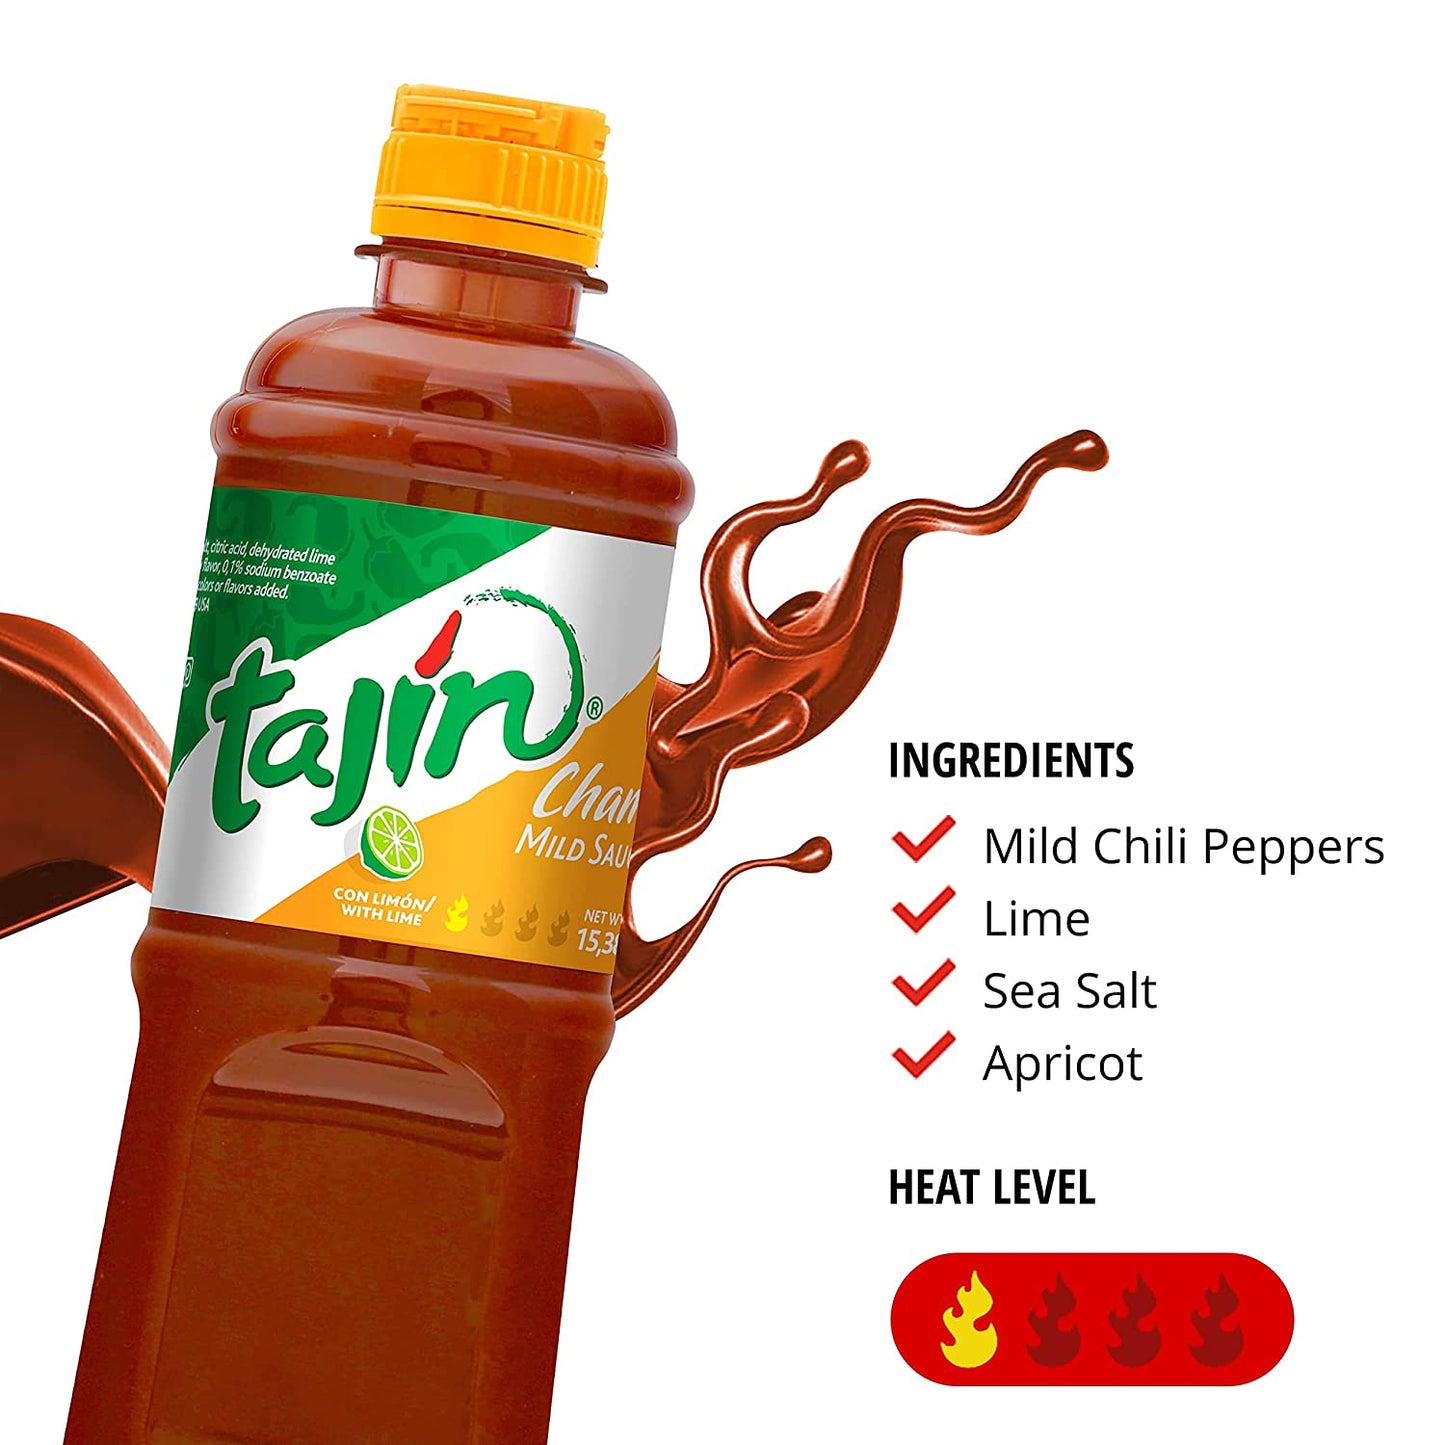 Tajin Fruity Chamoy Sauce 455ml and Mild Hot Sauce 455ml Bundle (Pack of 2)